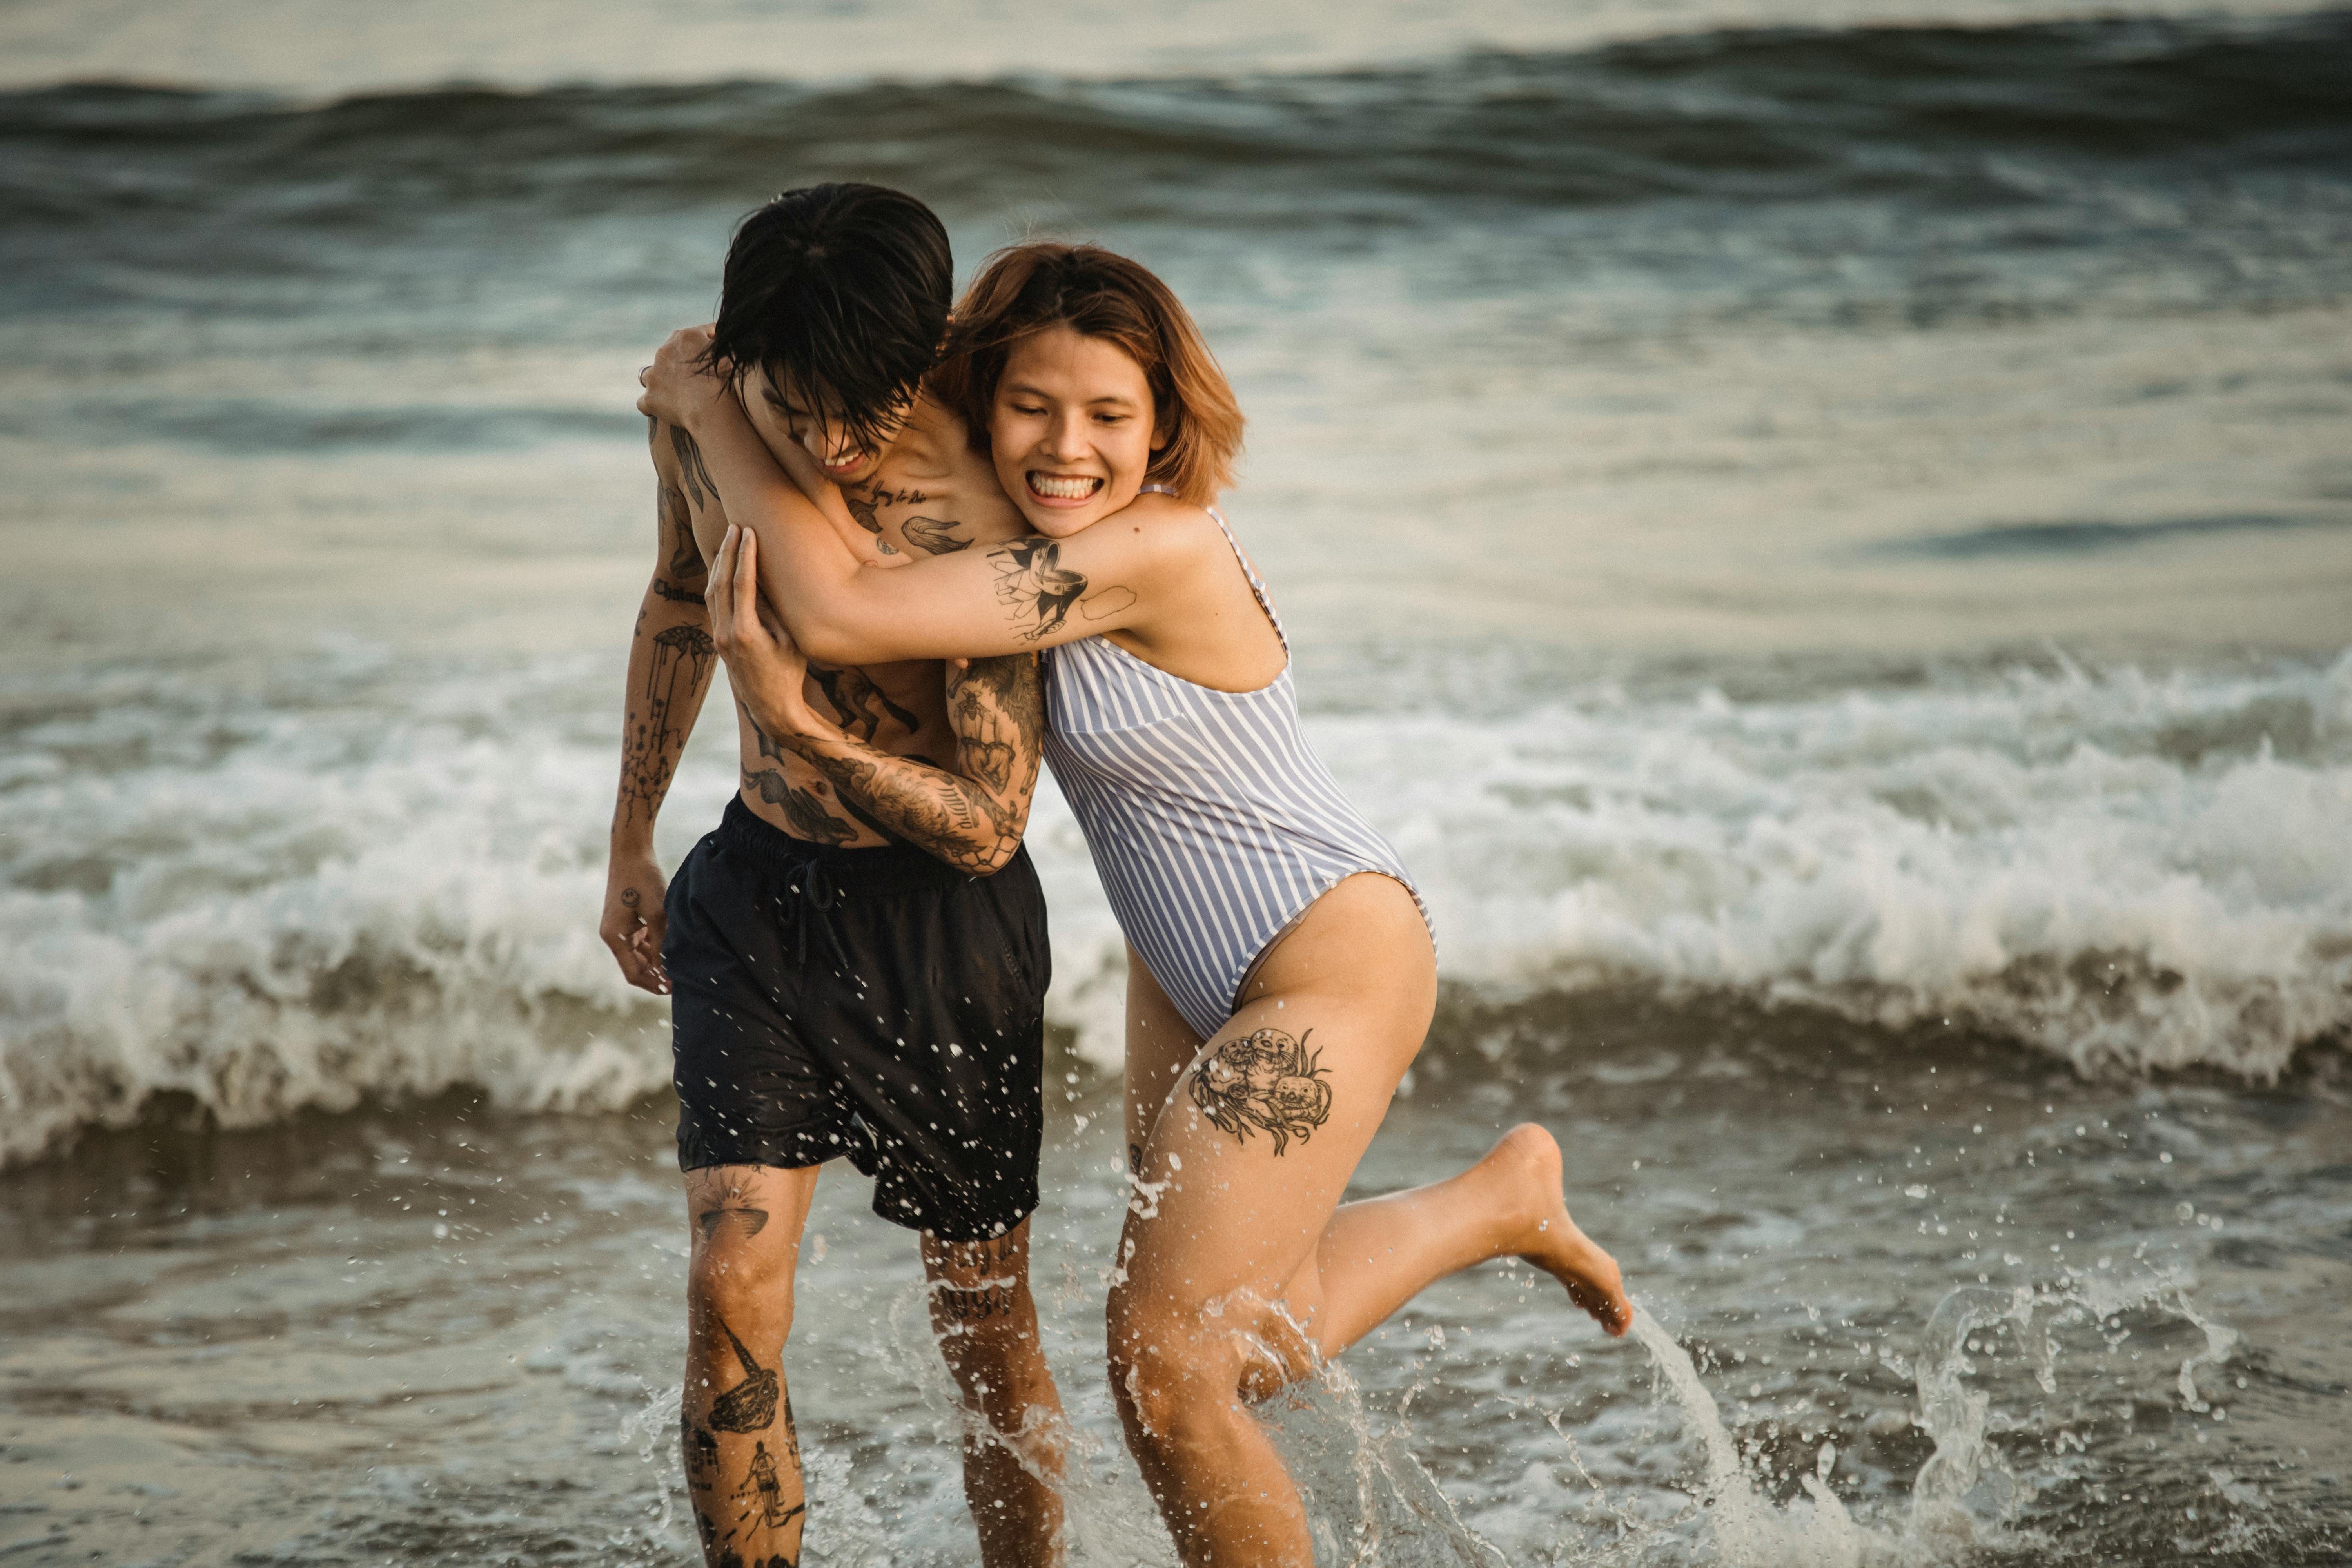 Man and Woman Enjoying the Beach · Free Stock Photo pic